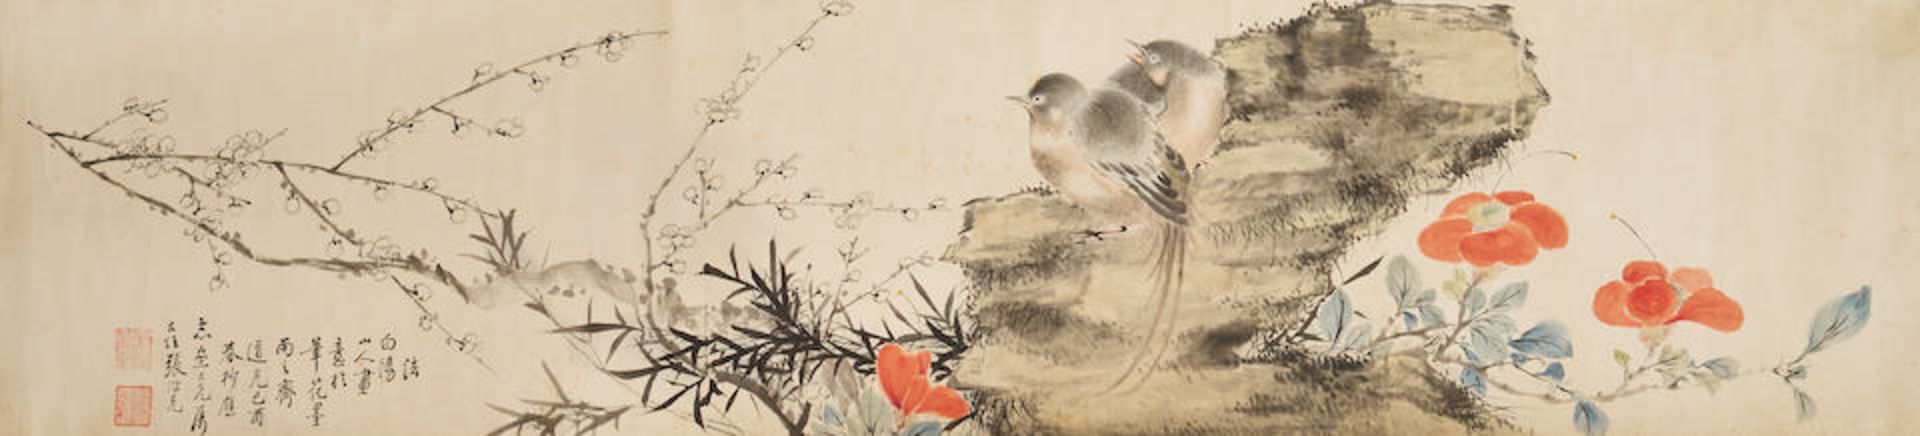 Zhang Jiguang (19th century) Bird and Flower